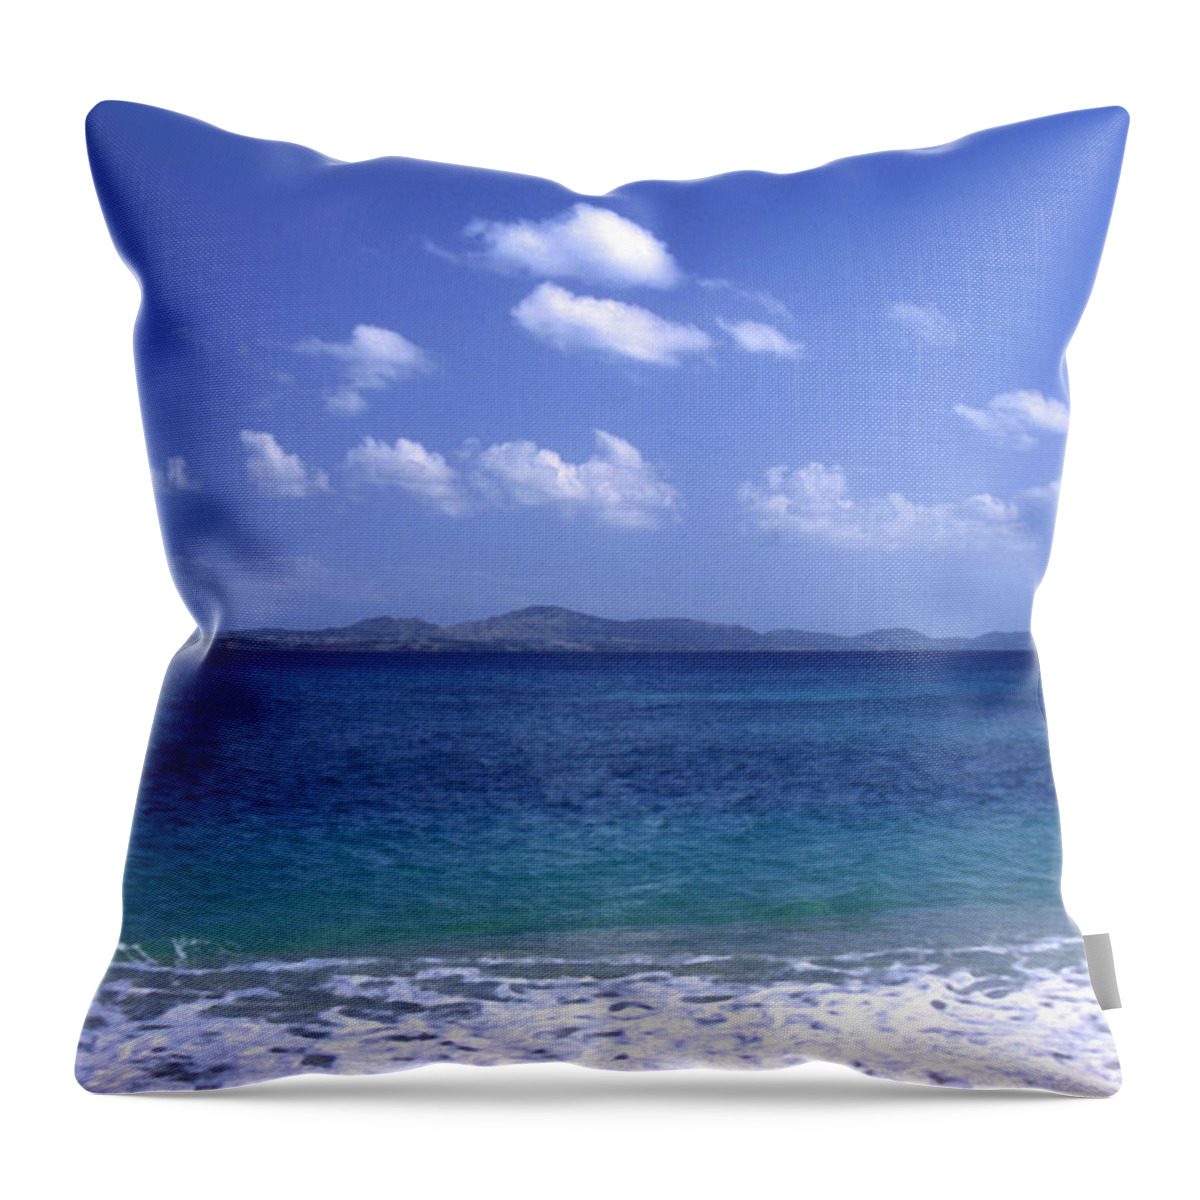 Okinawa Throw Pillow featuring the photograph Okinawa Beach 8 by Curtis J Neeley Jr